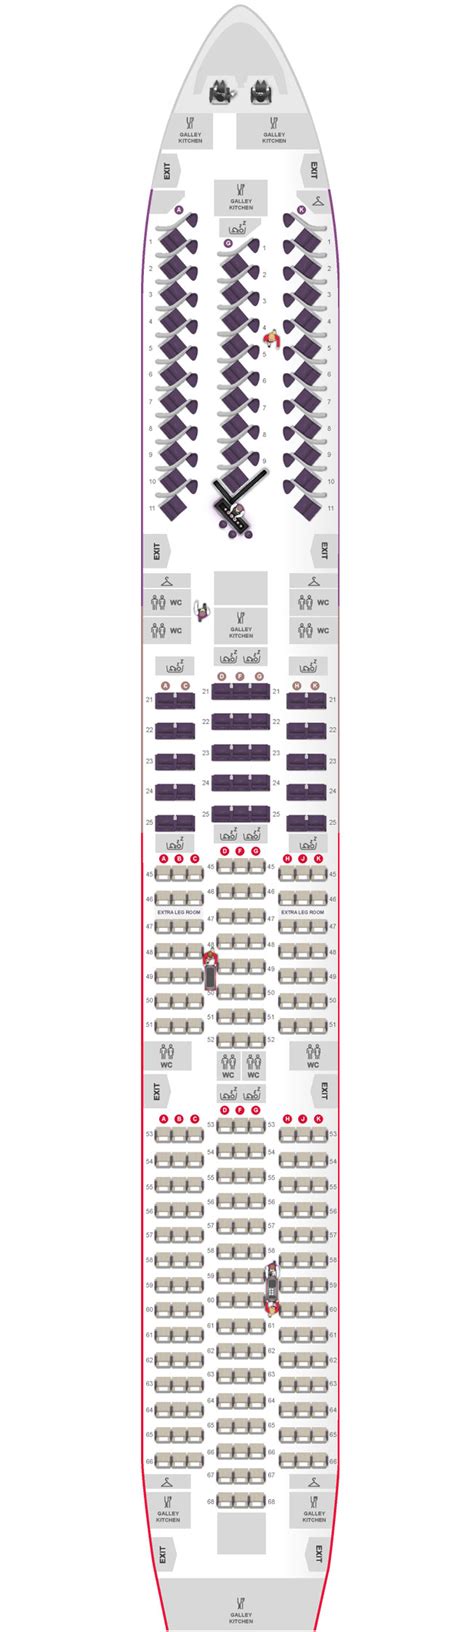 Boeing Dreamliner Virgin Atlantic Seating Plan Virgin Atlantic